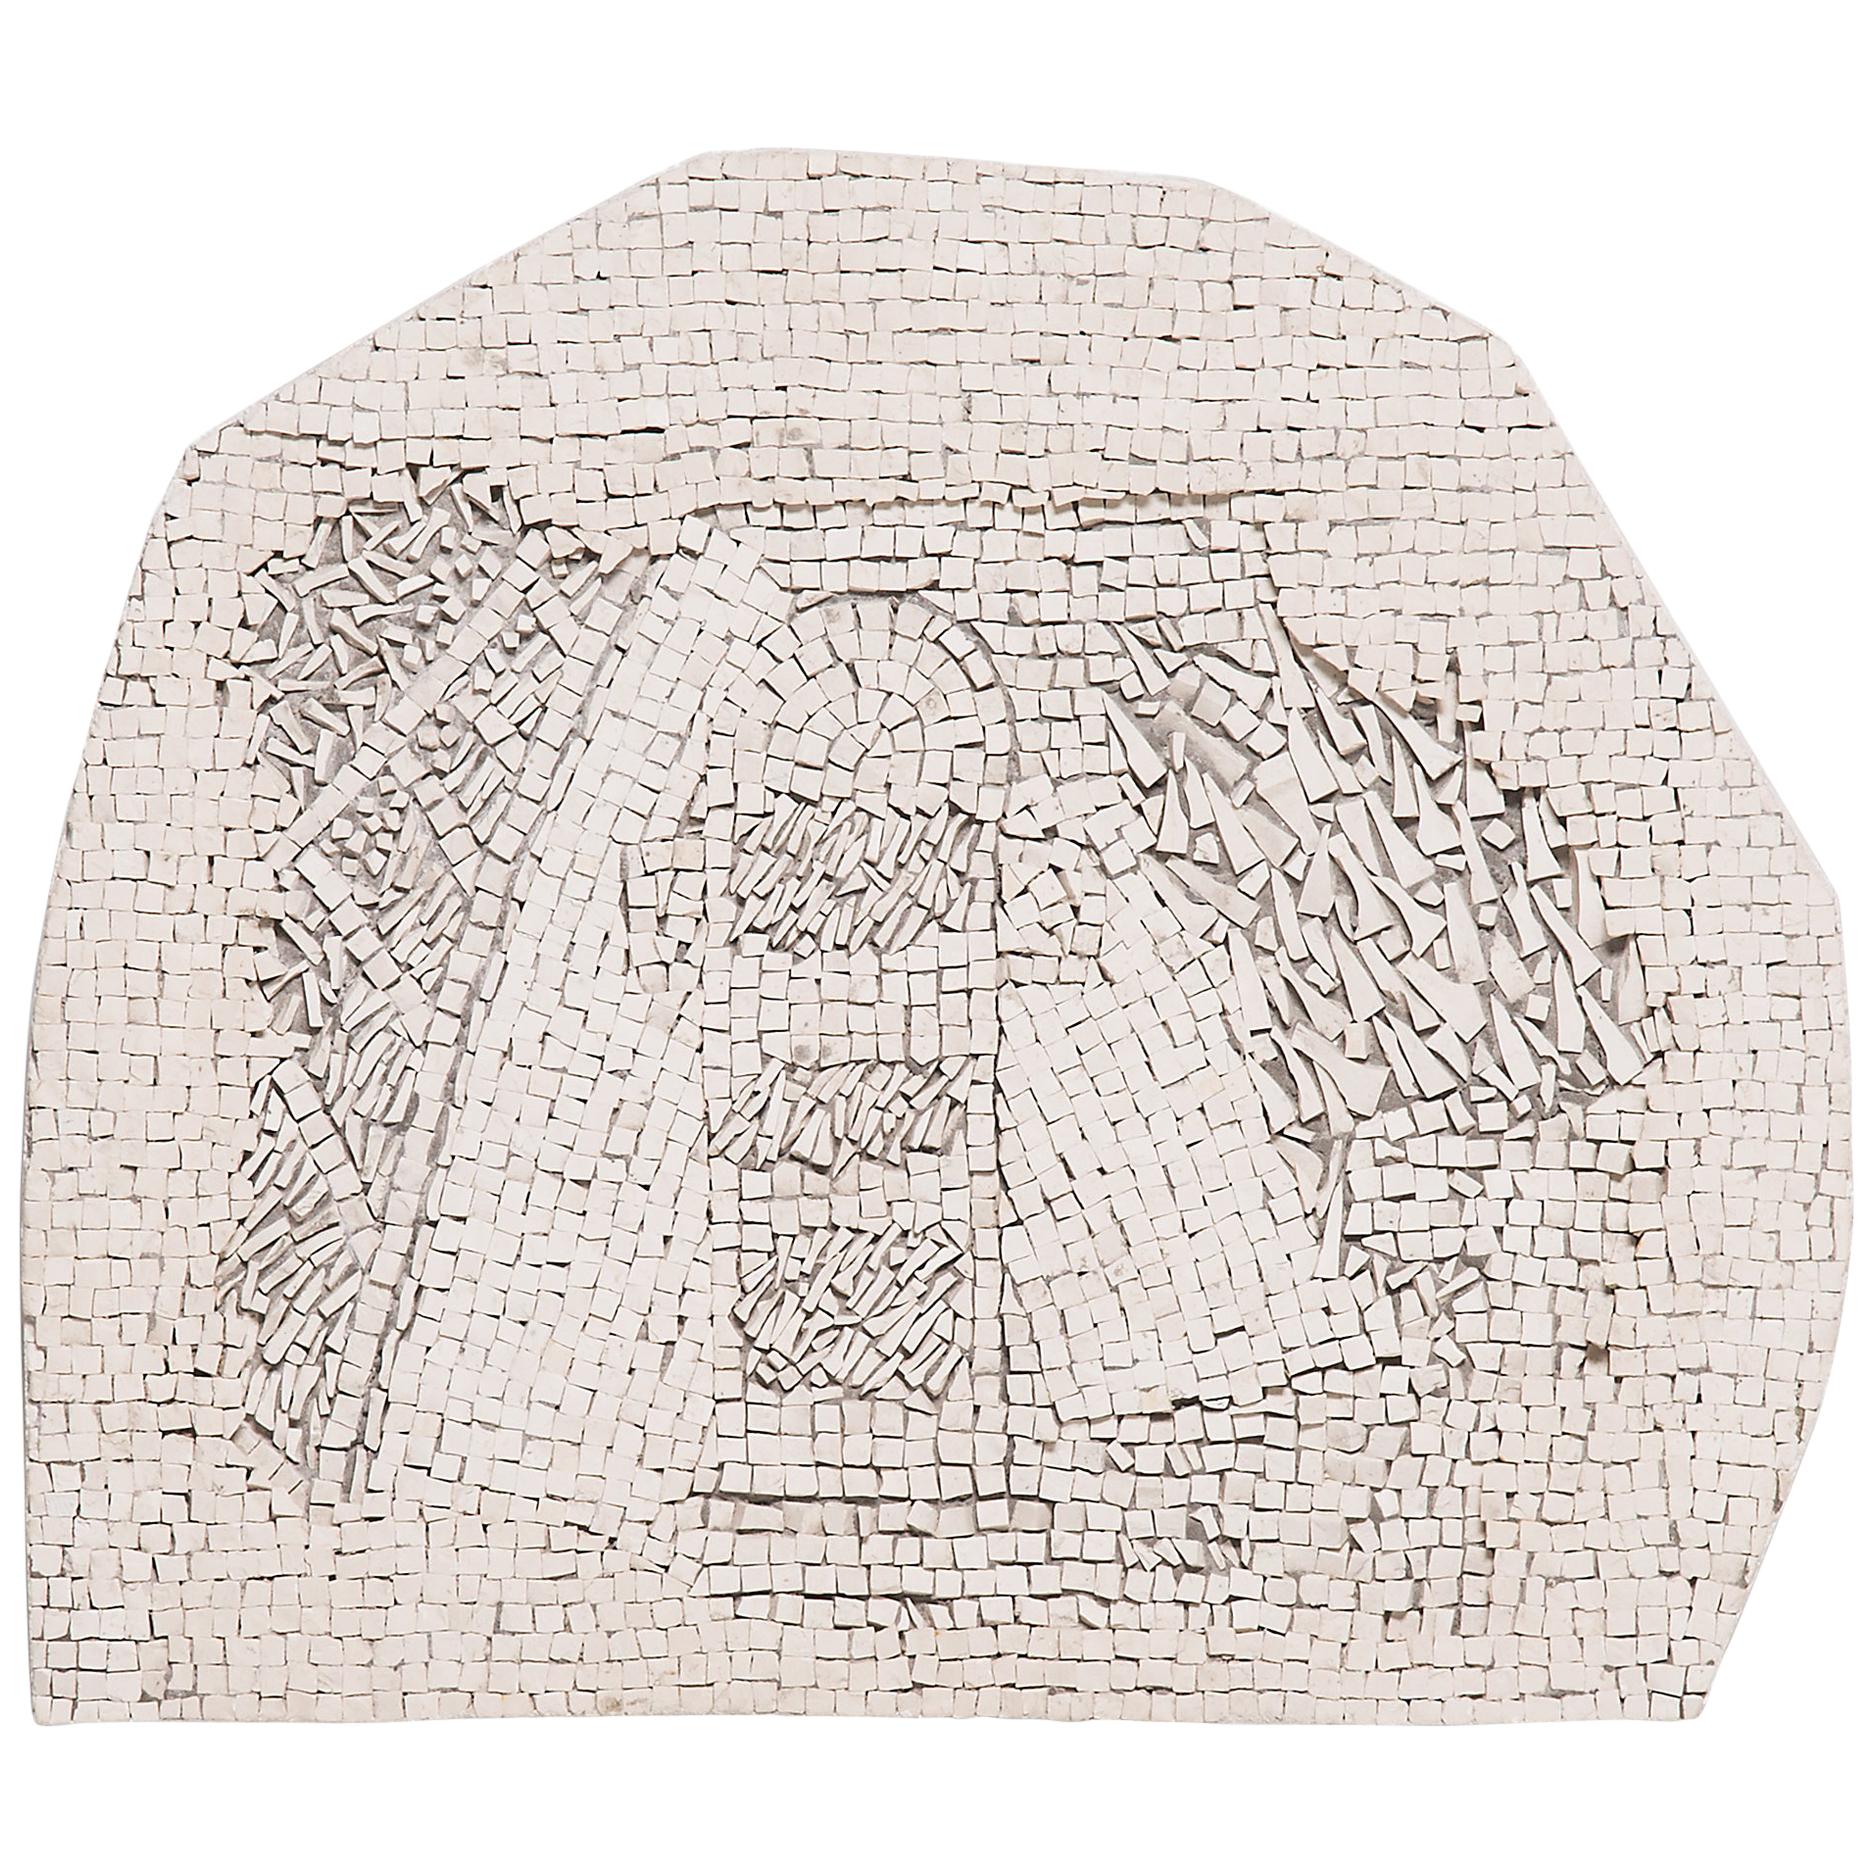 "A Wheel Stopper" Mosaic by Toyoharu Kii